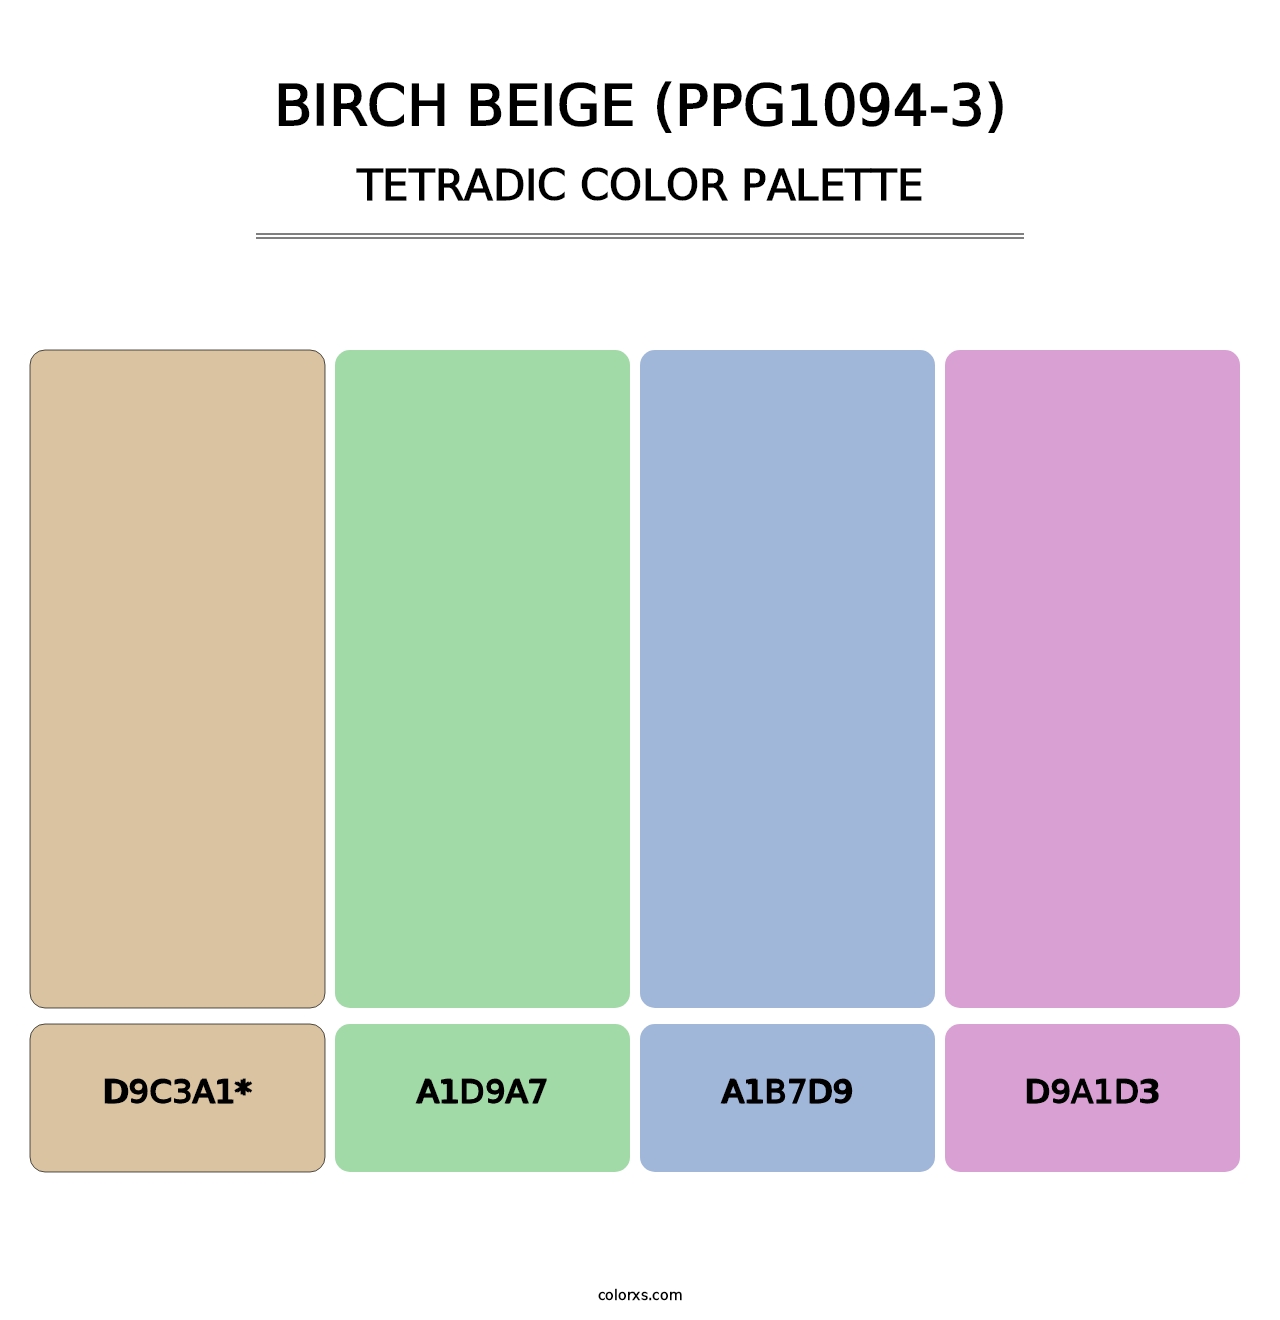 Birch Beige (PPG1094-3) - Tetradic Color Palette